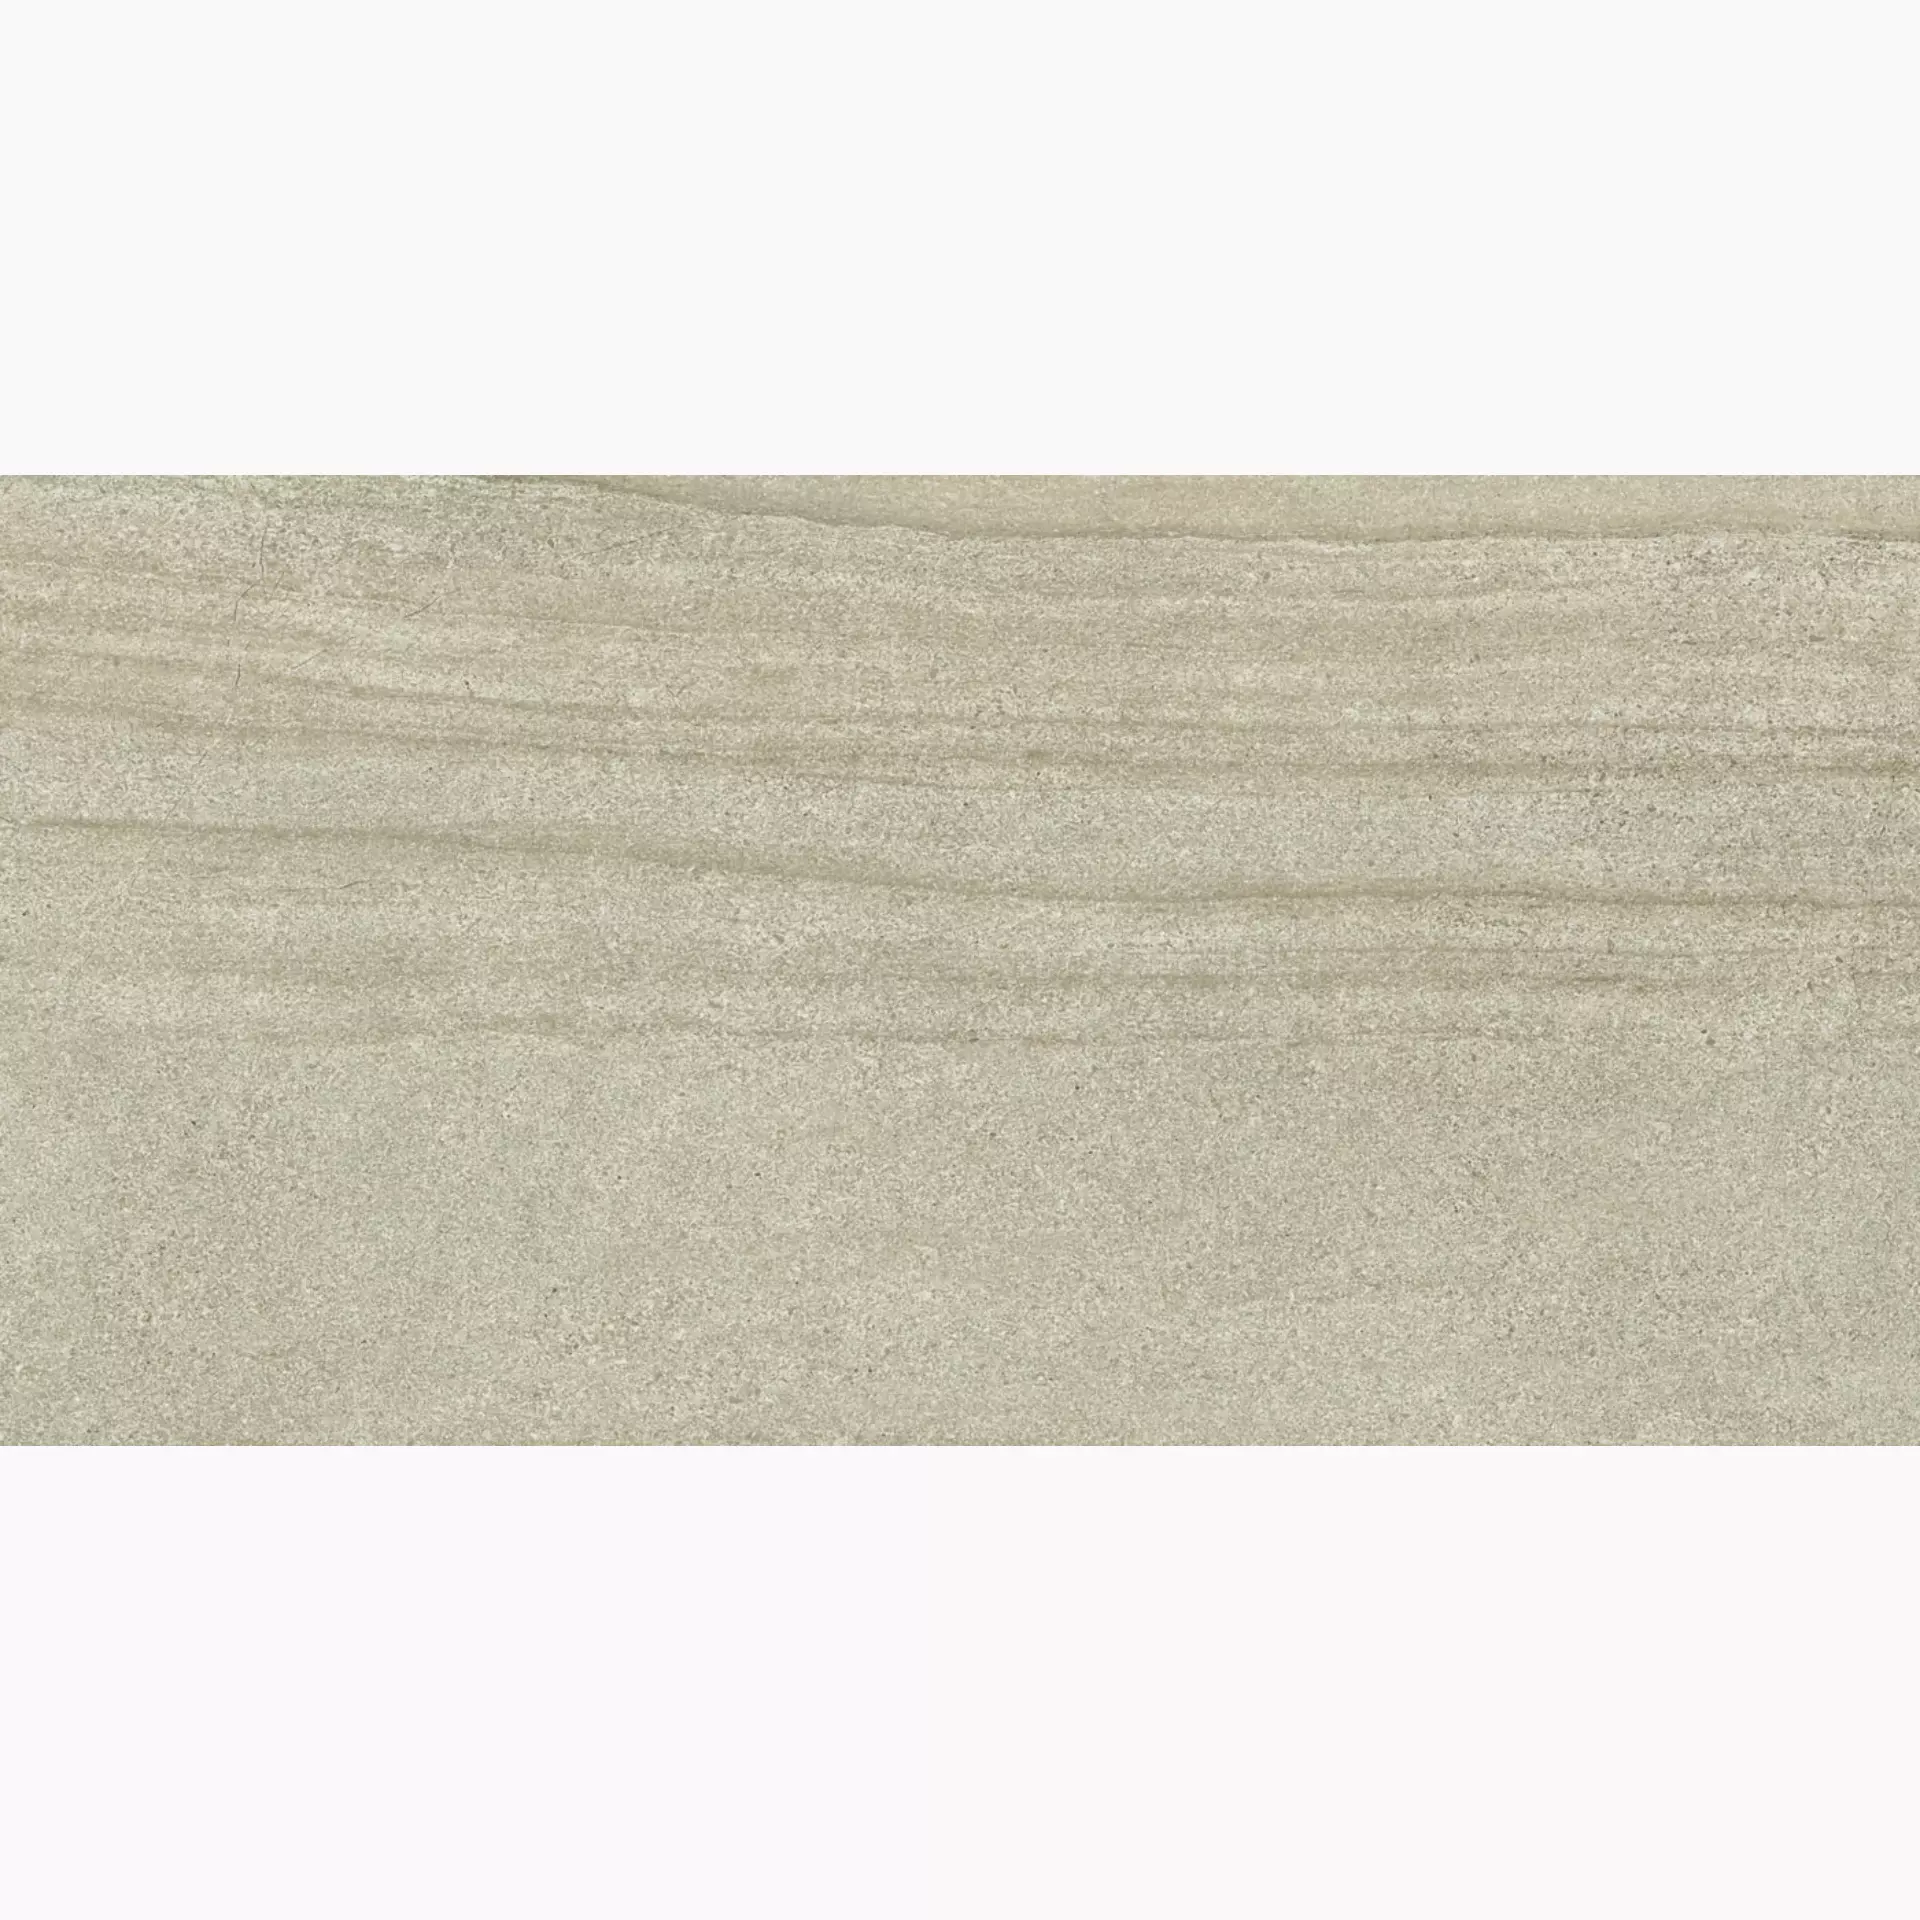 Ergon Stone Project Sand Naturale Falda E38A 30x60cm rectified 9,5mm